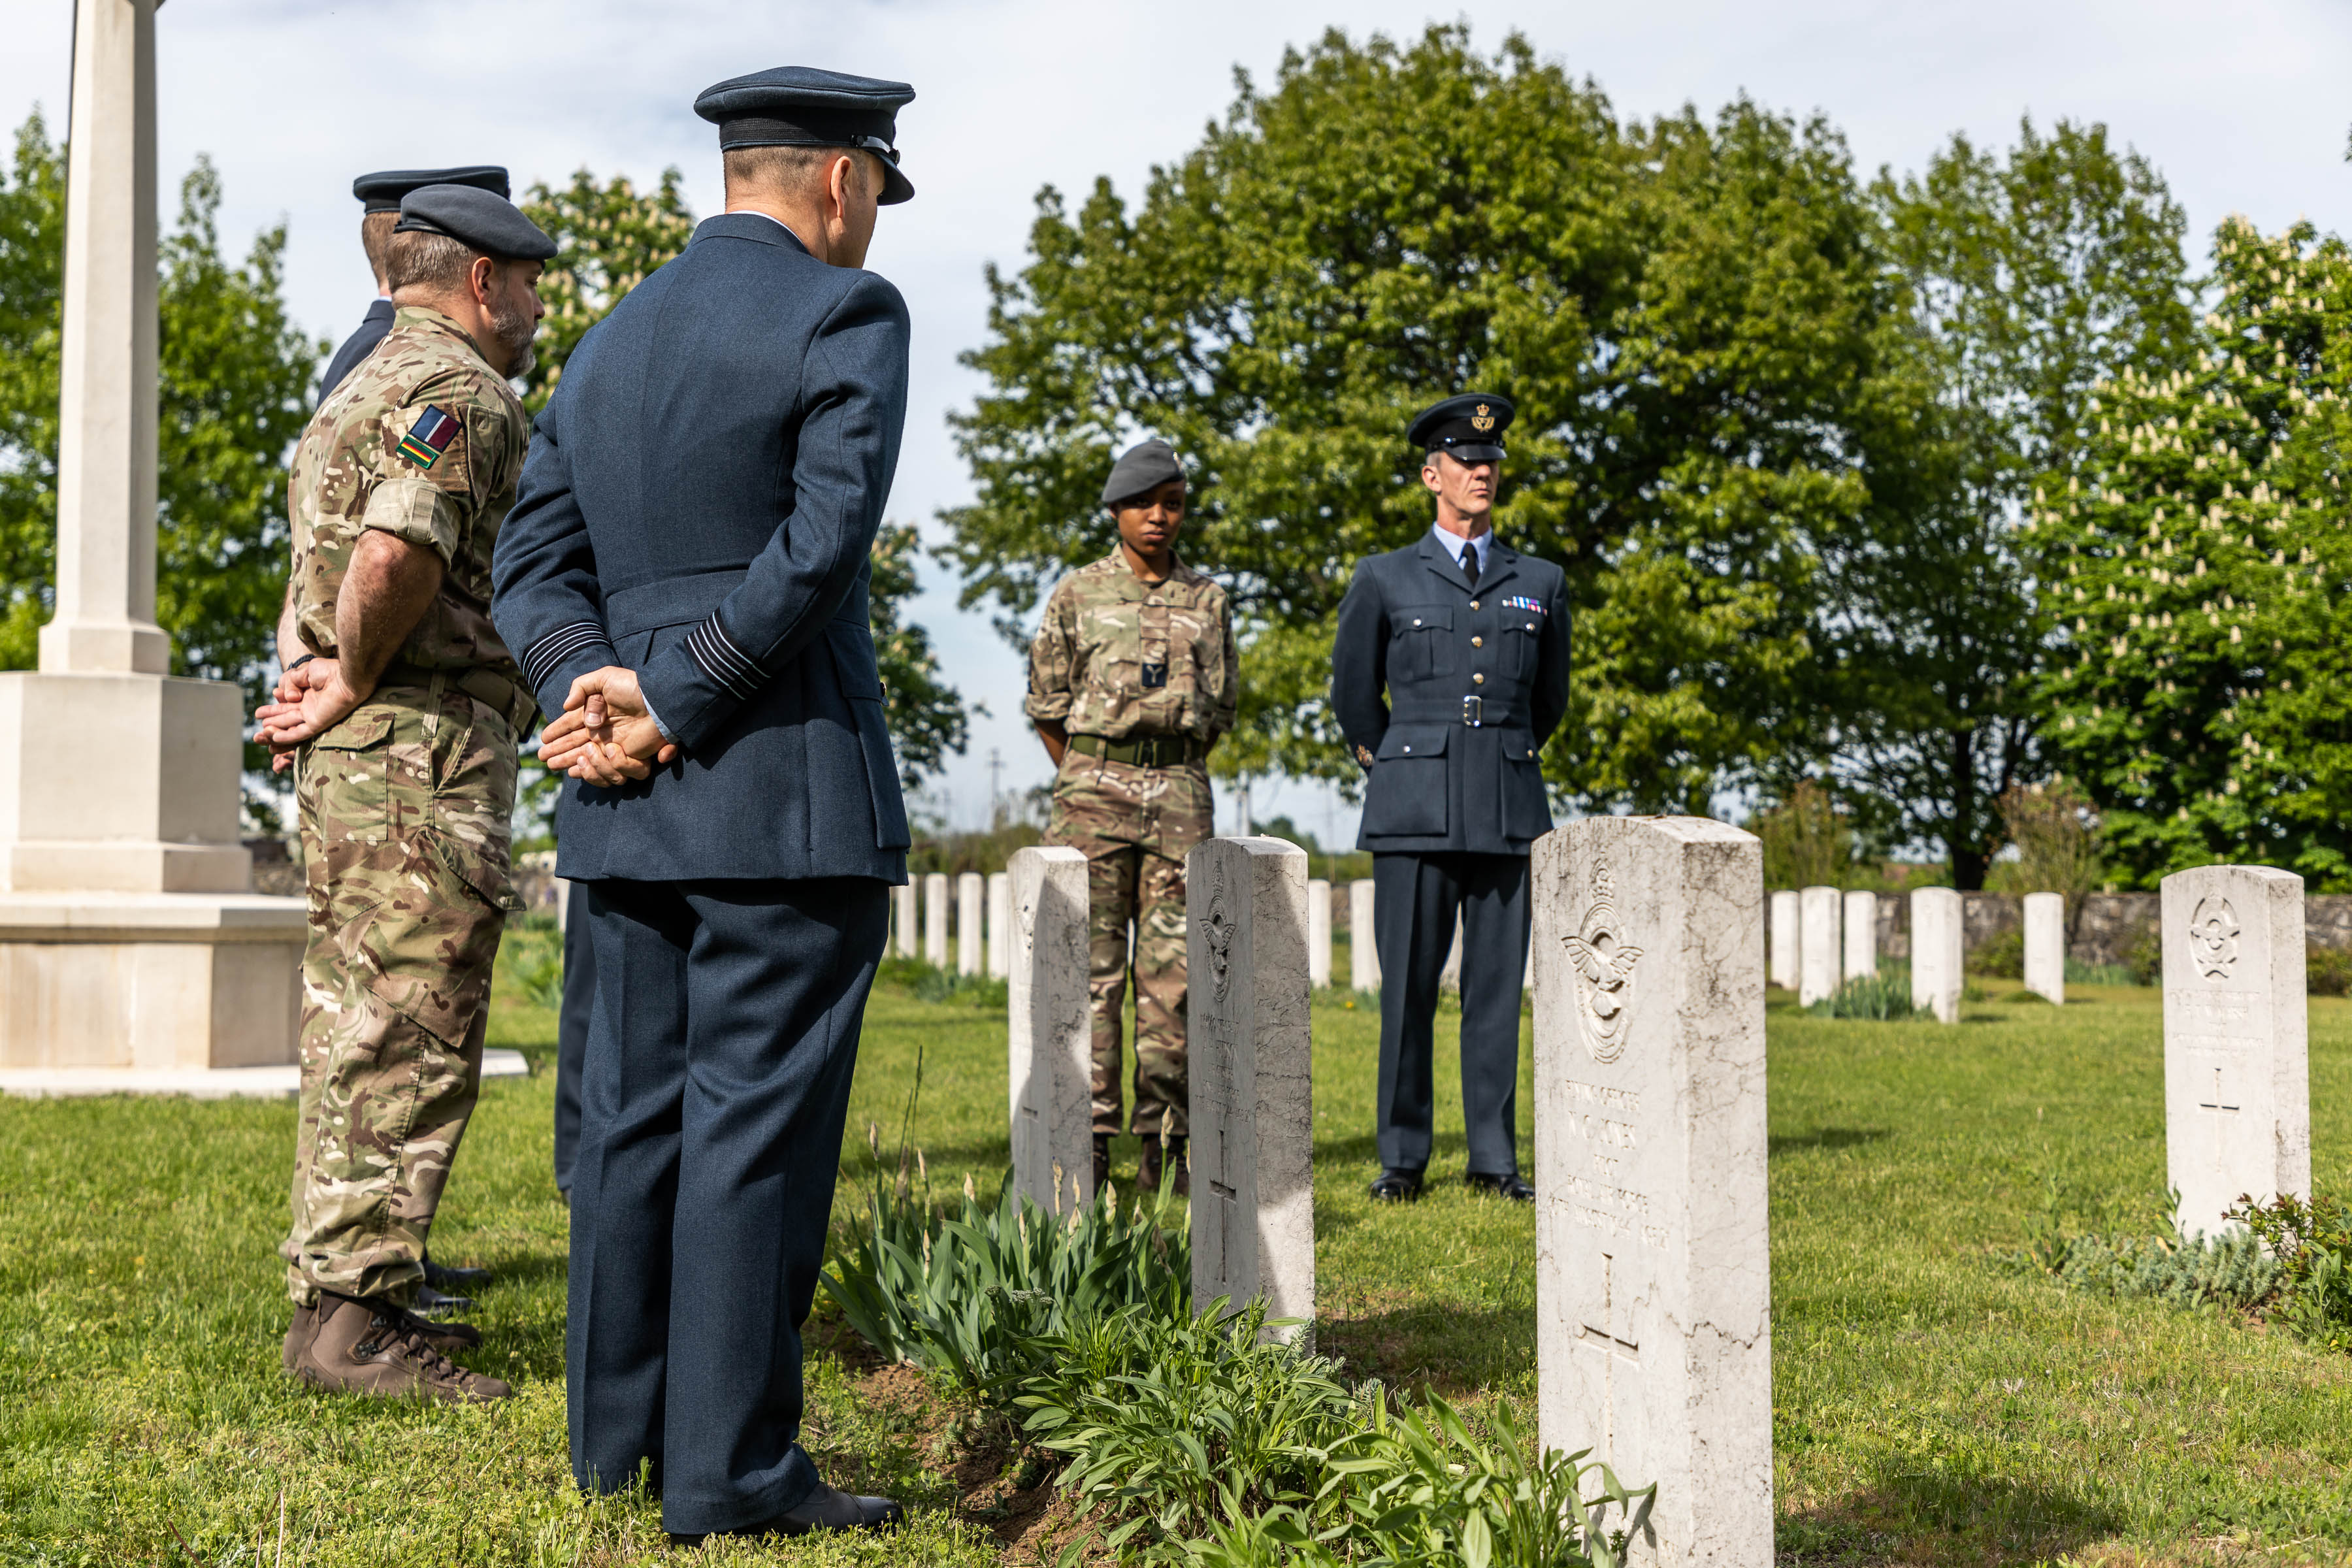 Personnel looks towards cemetery headstones.